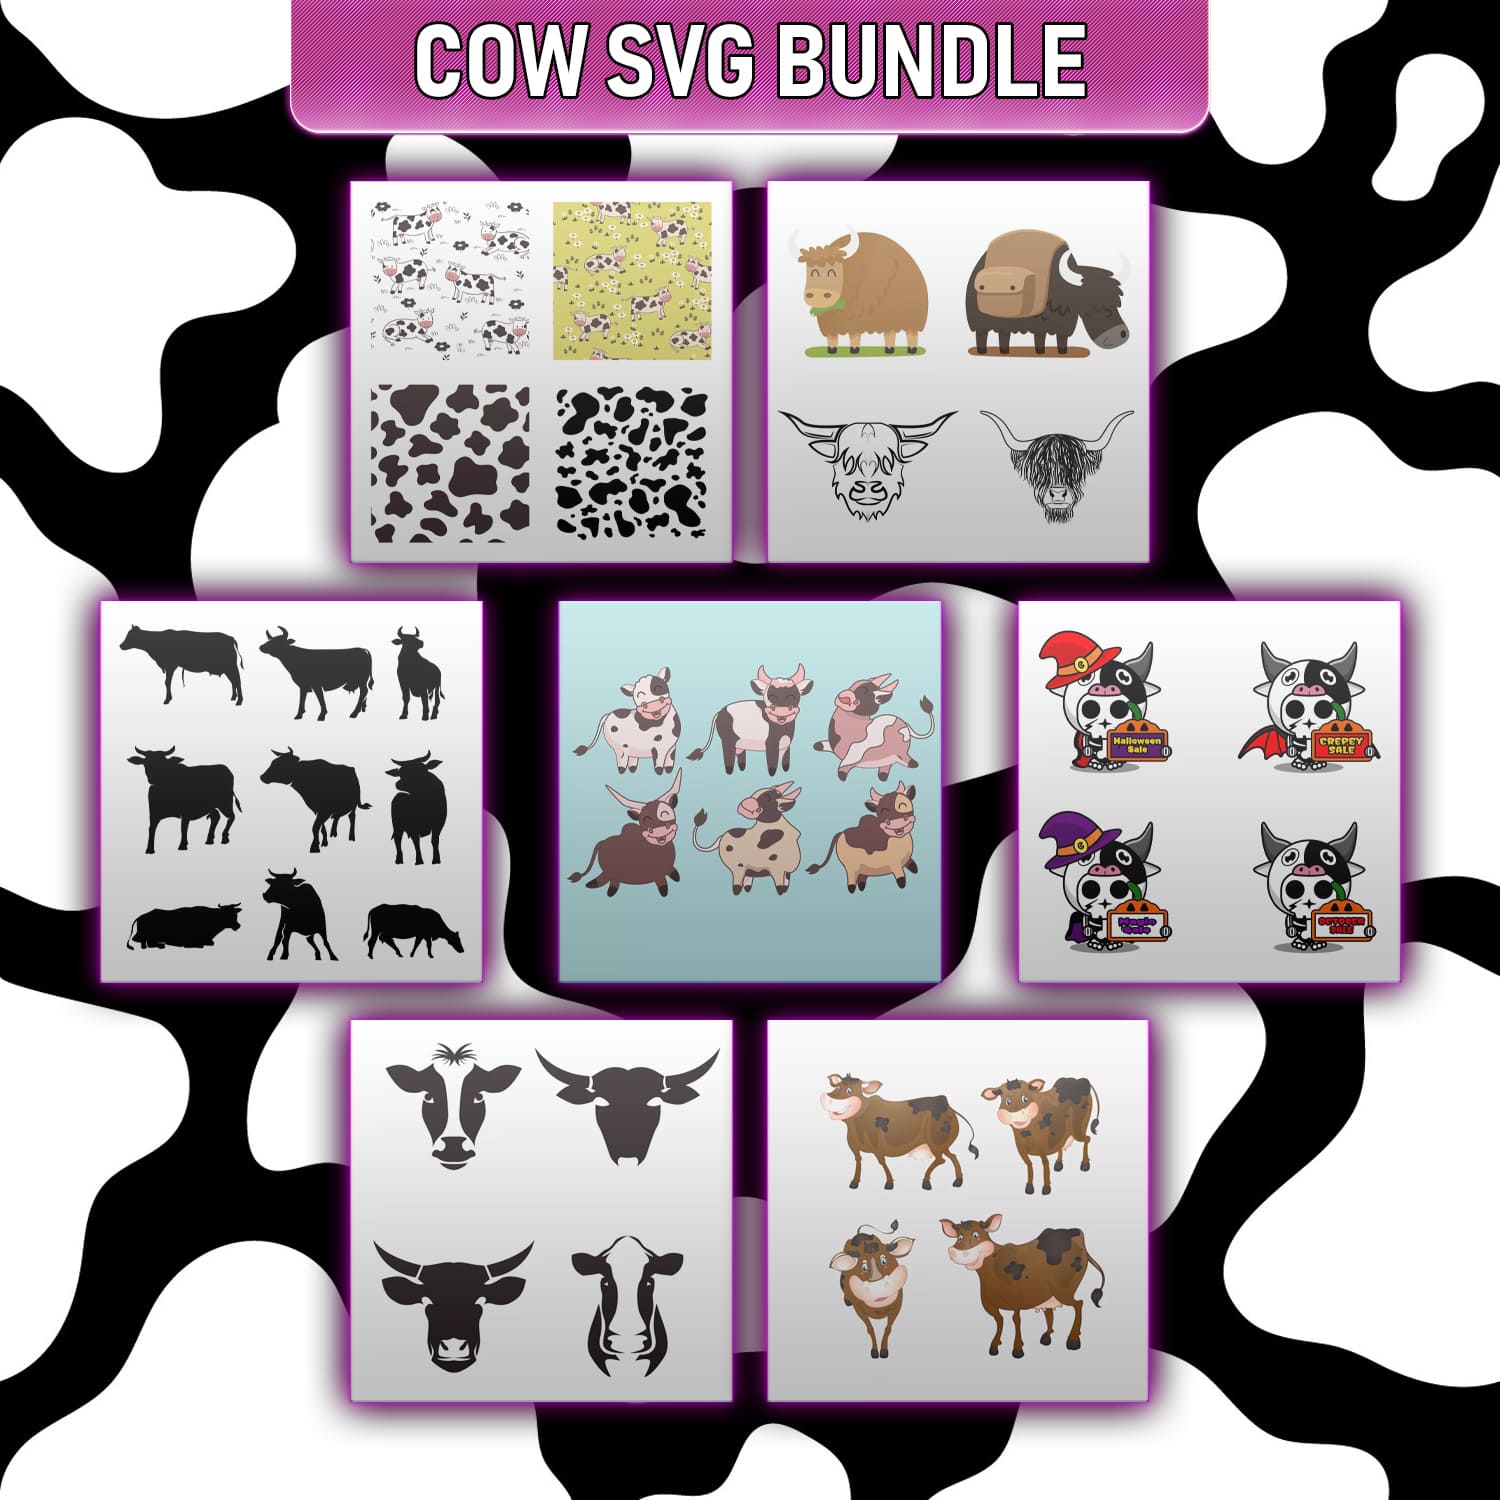 Picture of a cow svg bundle.